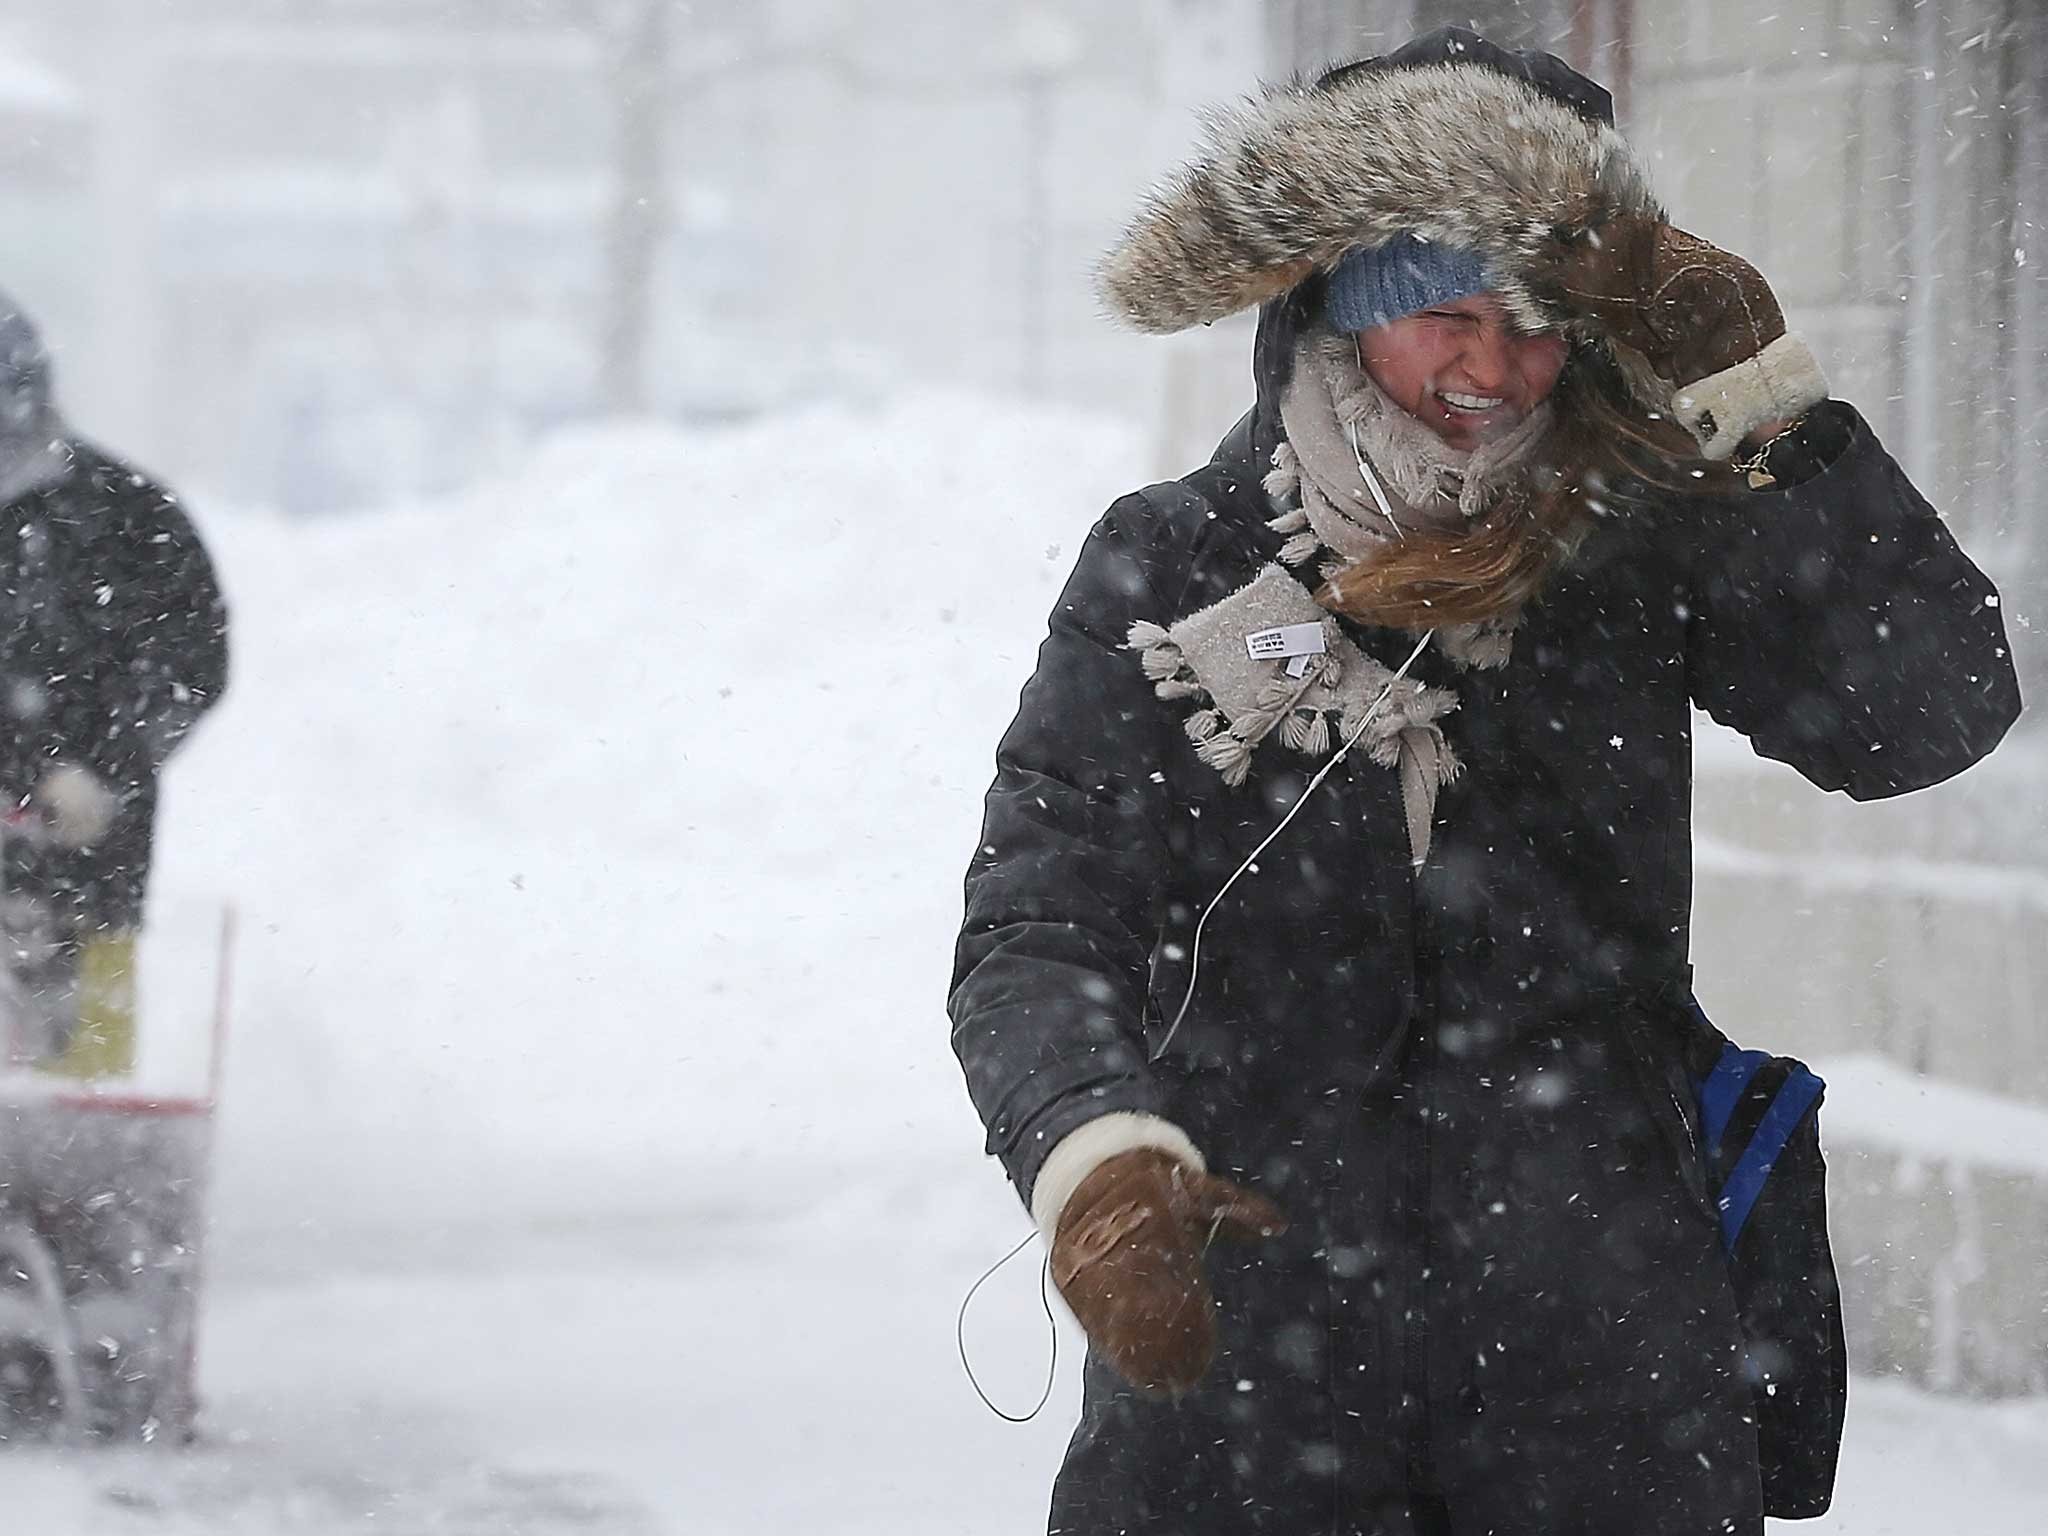 An American woman battles through a snow storm in 2013